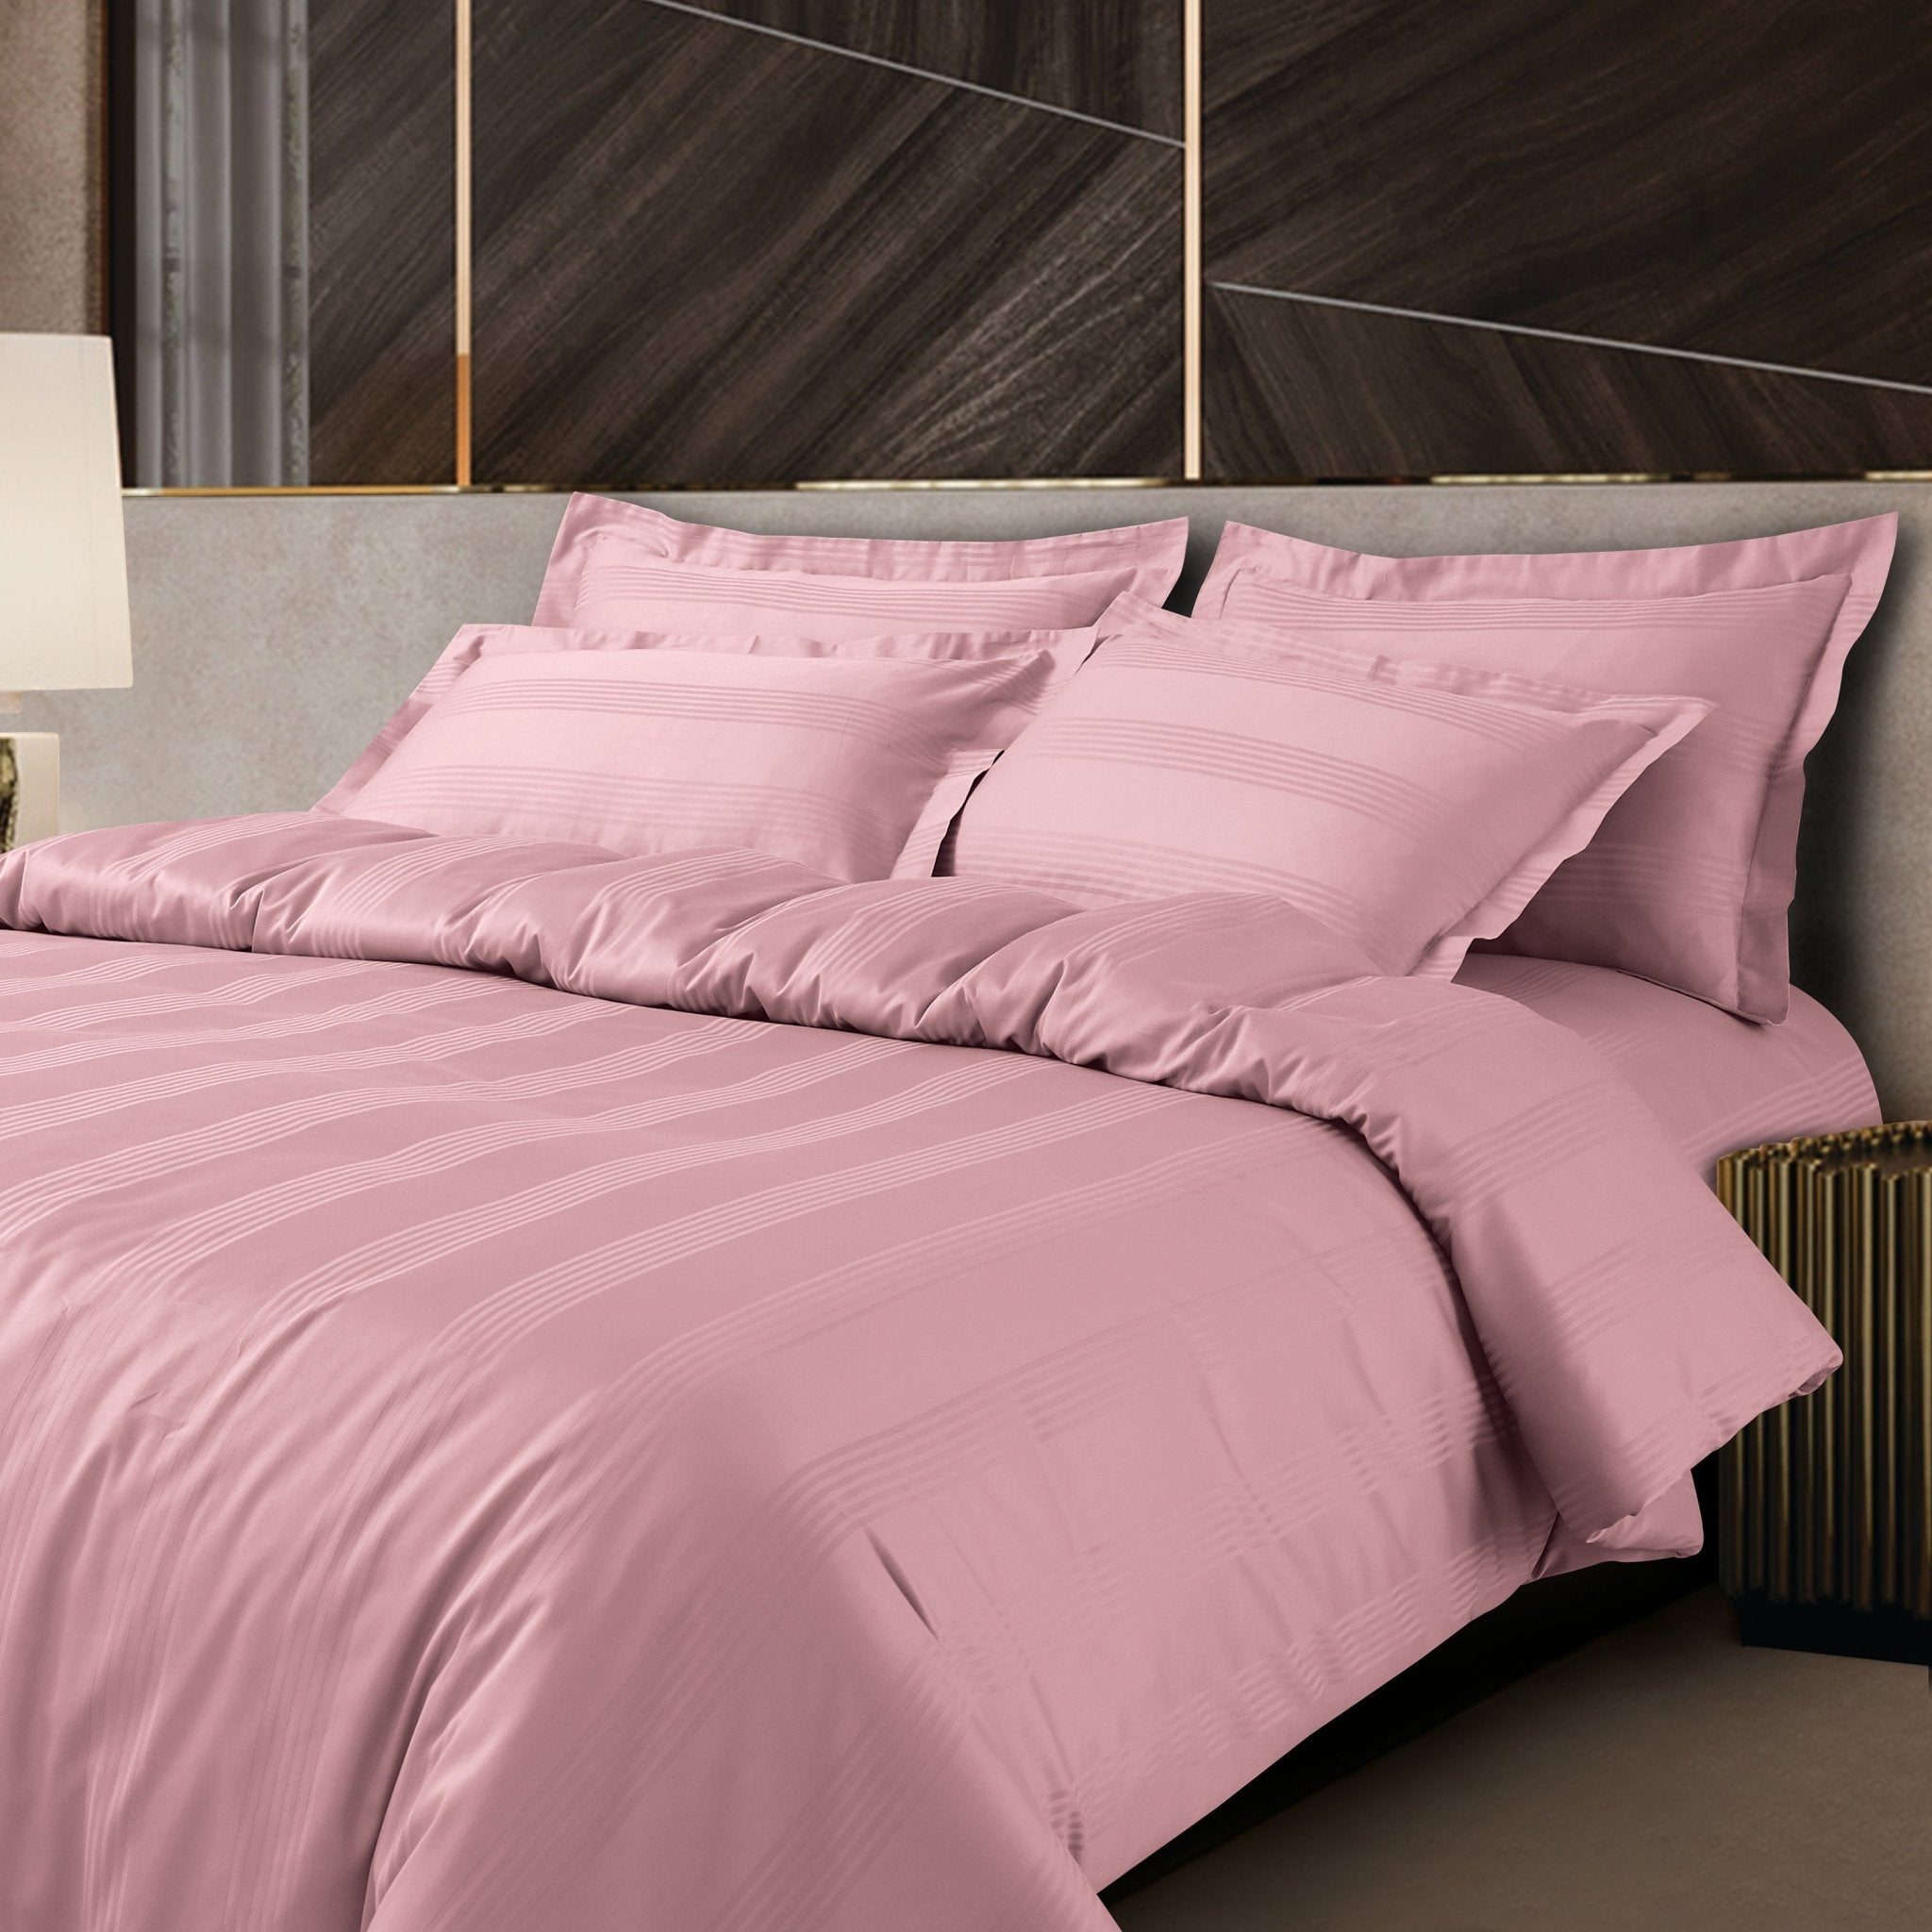 Malako Turin Jacquard Rose Pink Stripes 450 TC 100% Cotton King Size 6 Piece Comforter Set - MALAKO